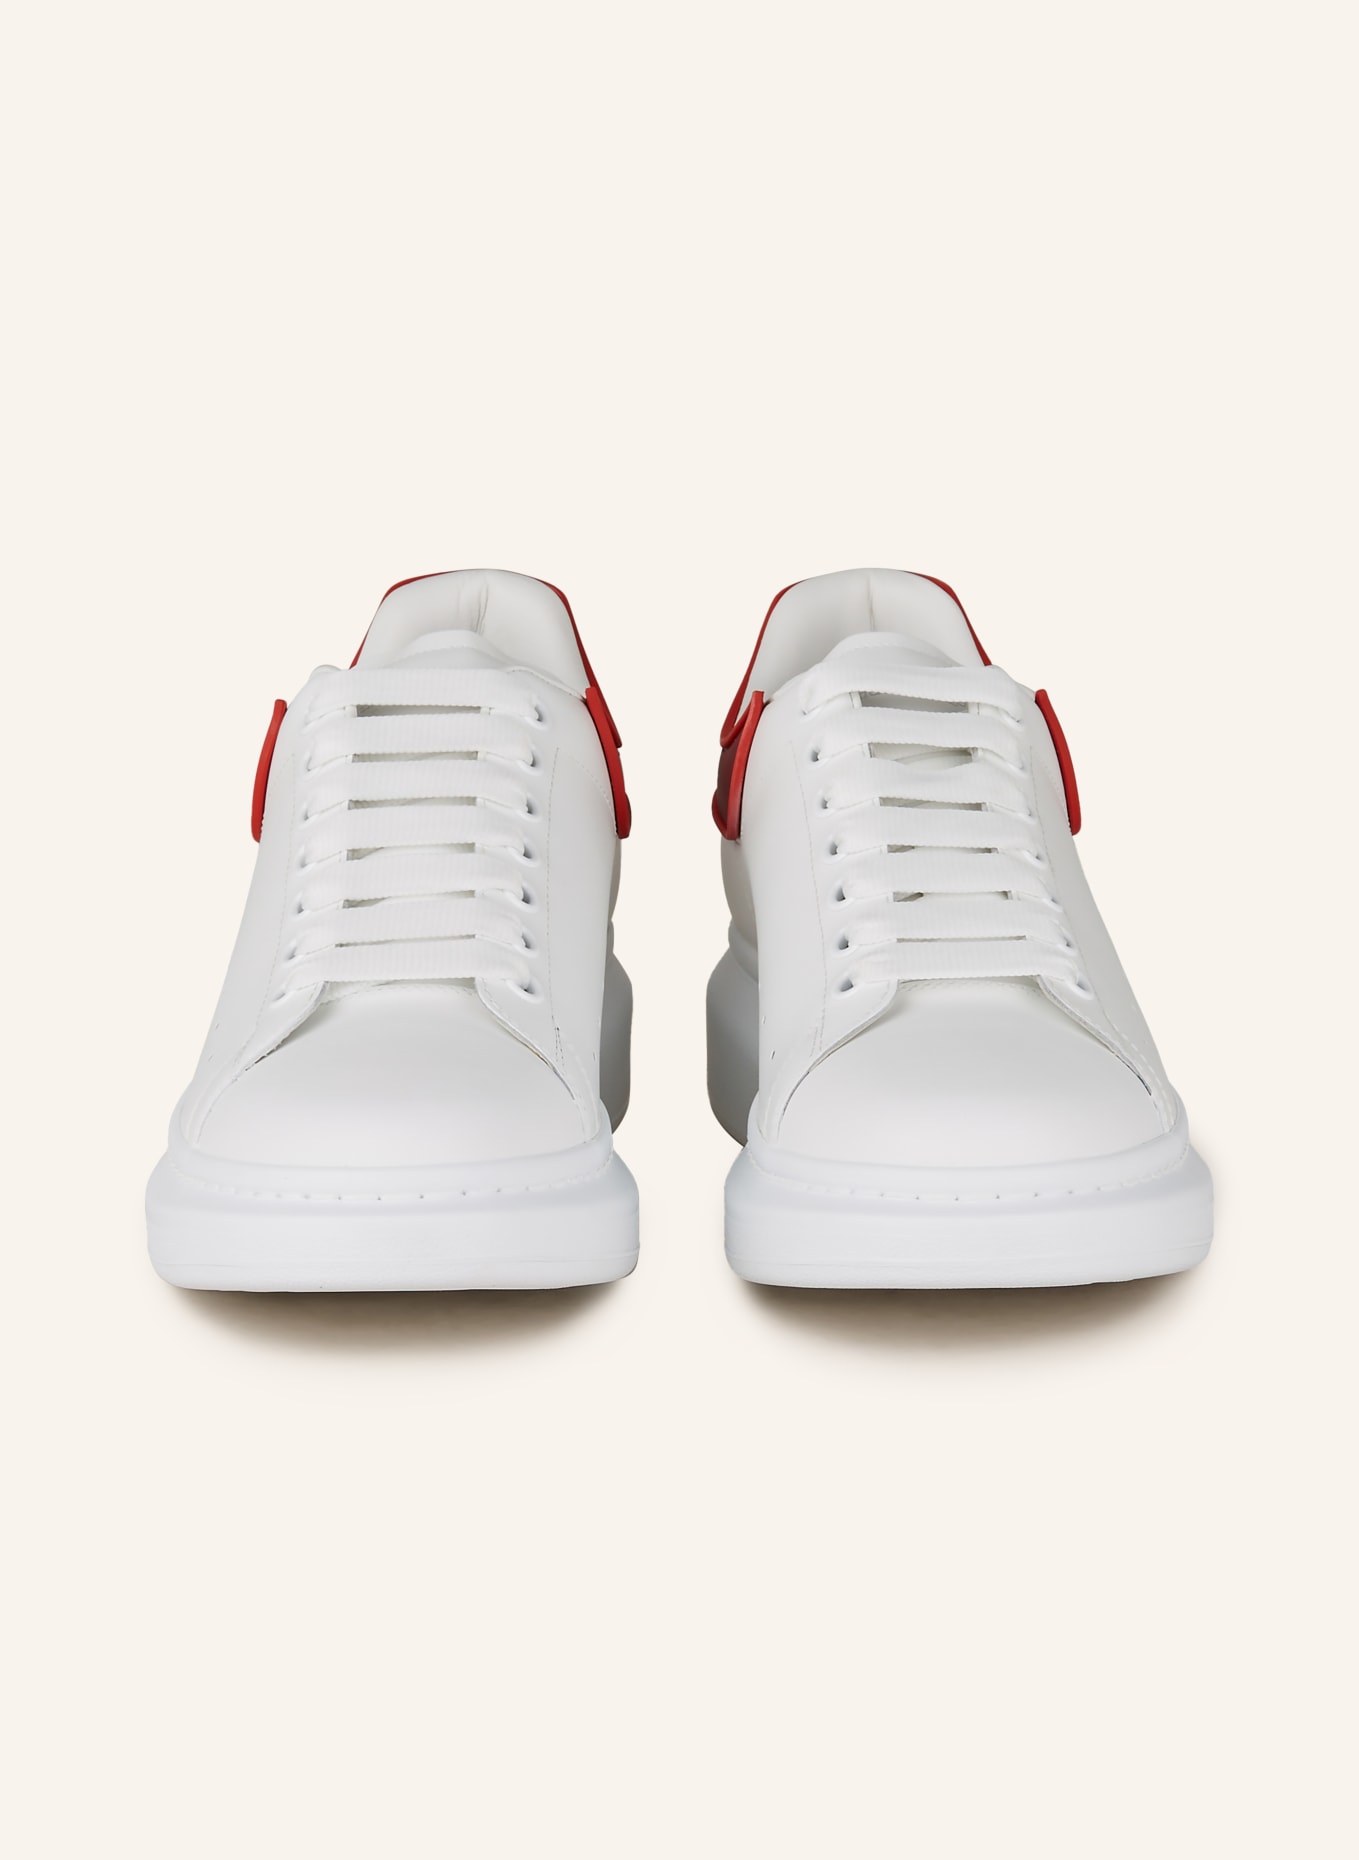 ALEXANDER MCQUEEN: Larry leather sneakers - Red | ALEXANDER MCQUEEN sneakers  553680WHGP7 online at GIGLIO.COM